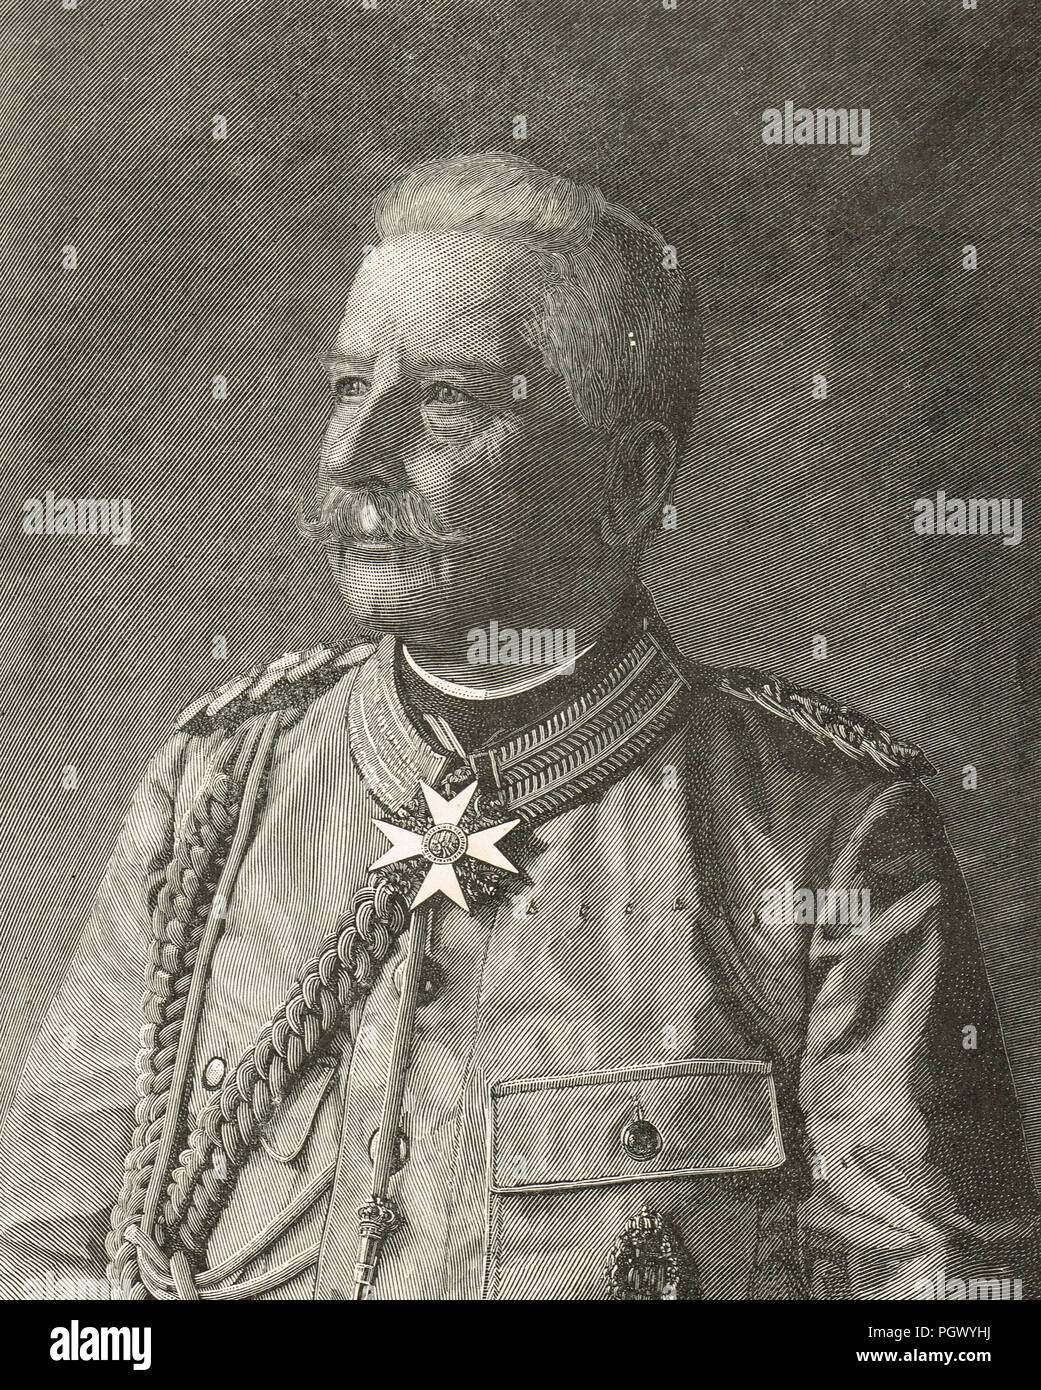 Comte Alfred Ludwig Heinrich Karl Graf von Waldersee, chef de l'état-major allemand impériale, vers 1900 Banque D'Images